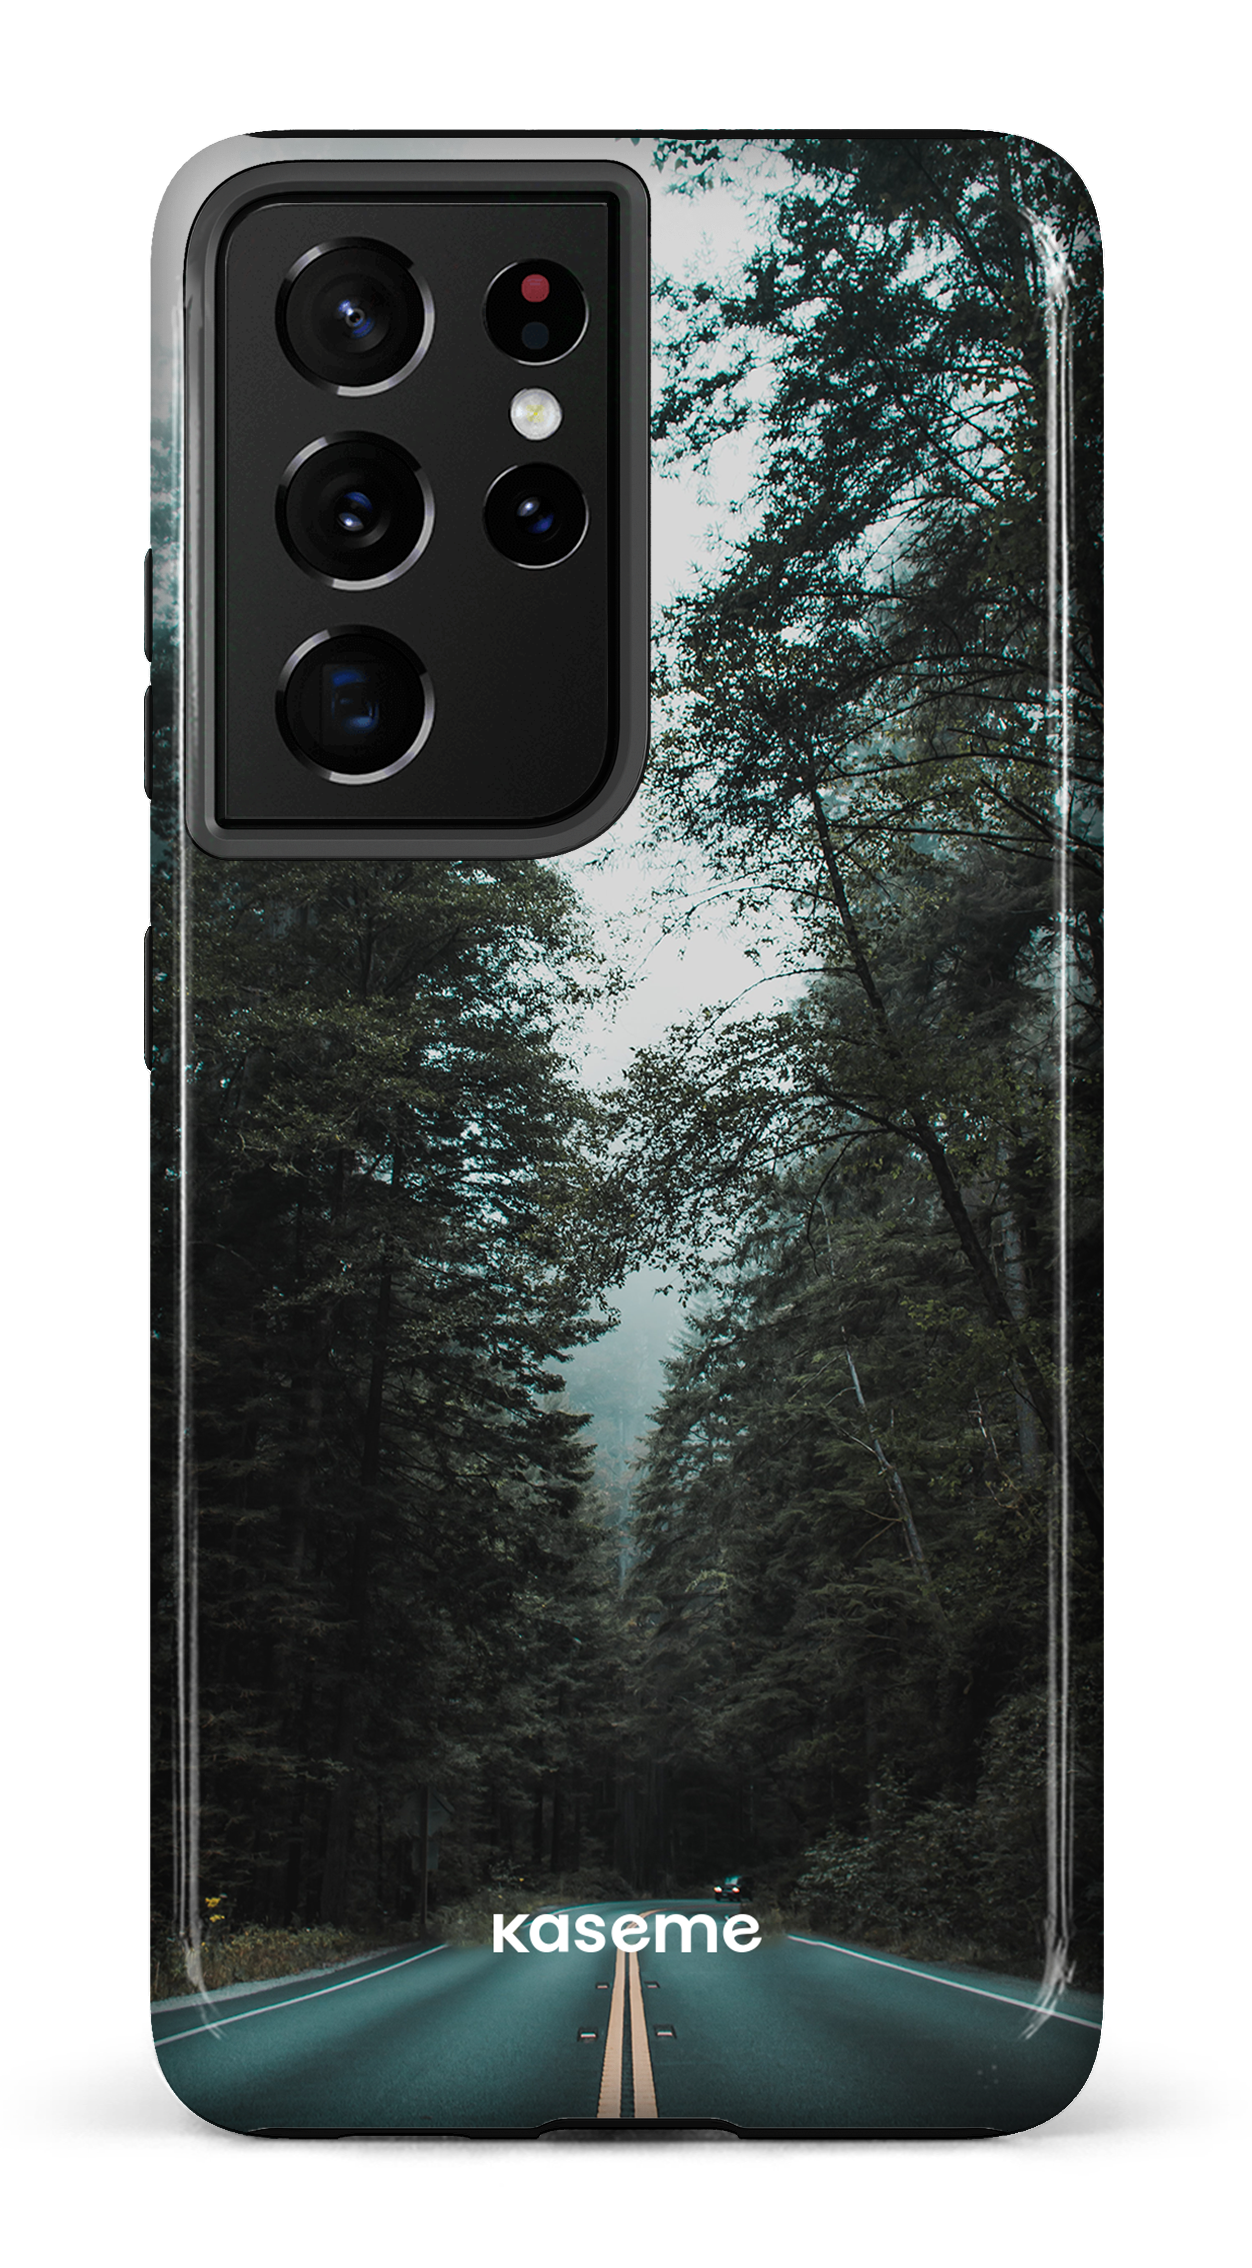 Sequoia - Galaxy S21 Ultra